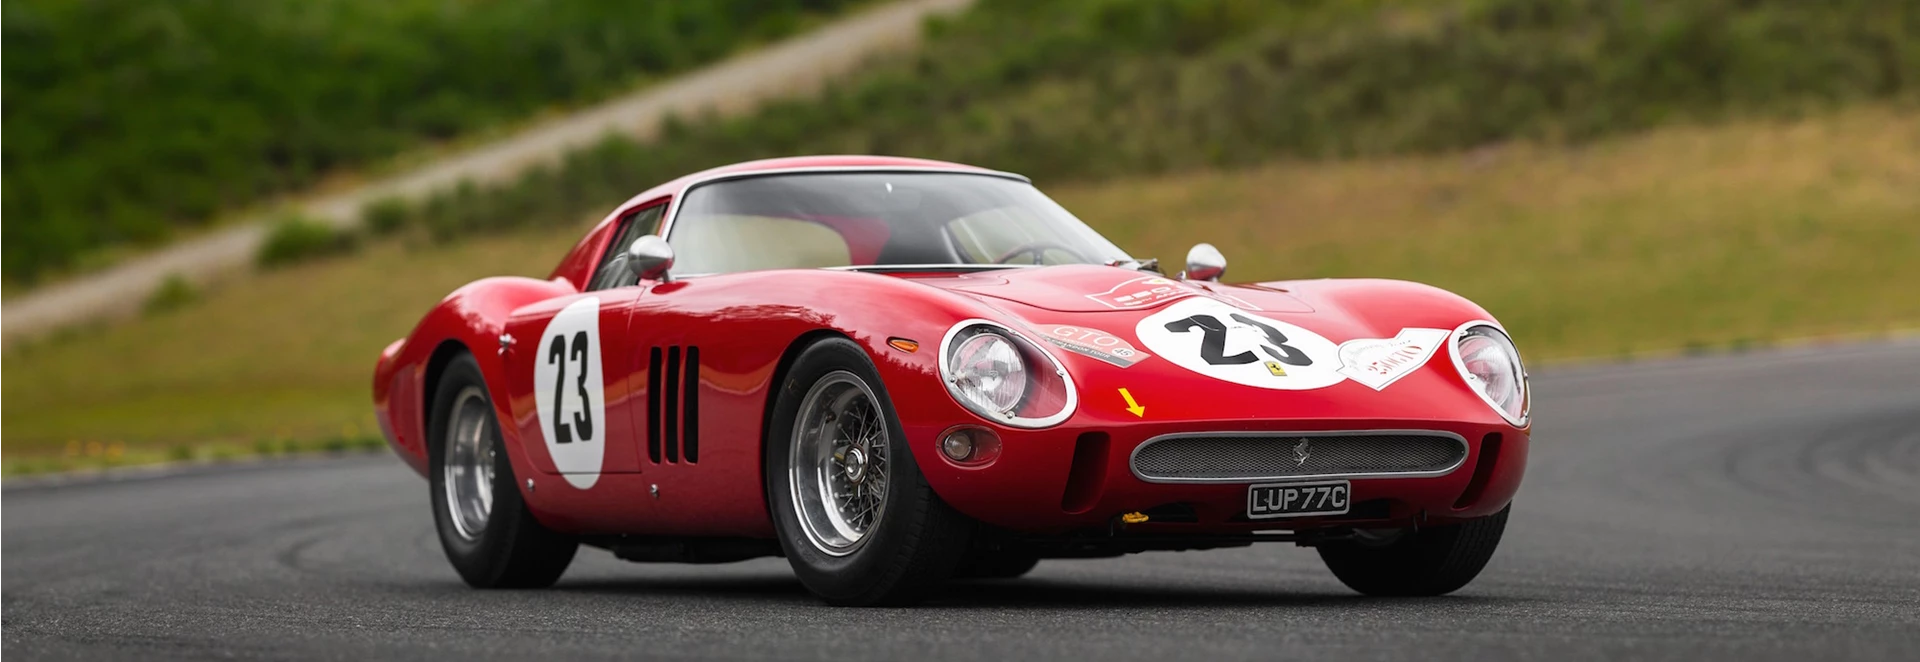 Ferrari 250 GTO set to break auction records at Pebble Beach sale